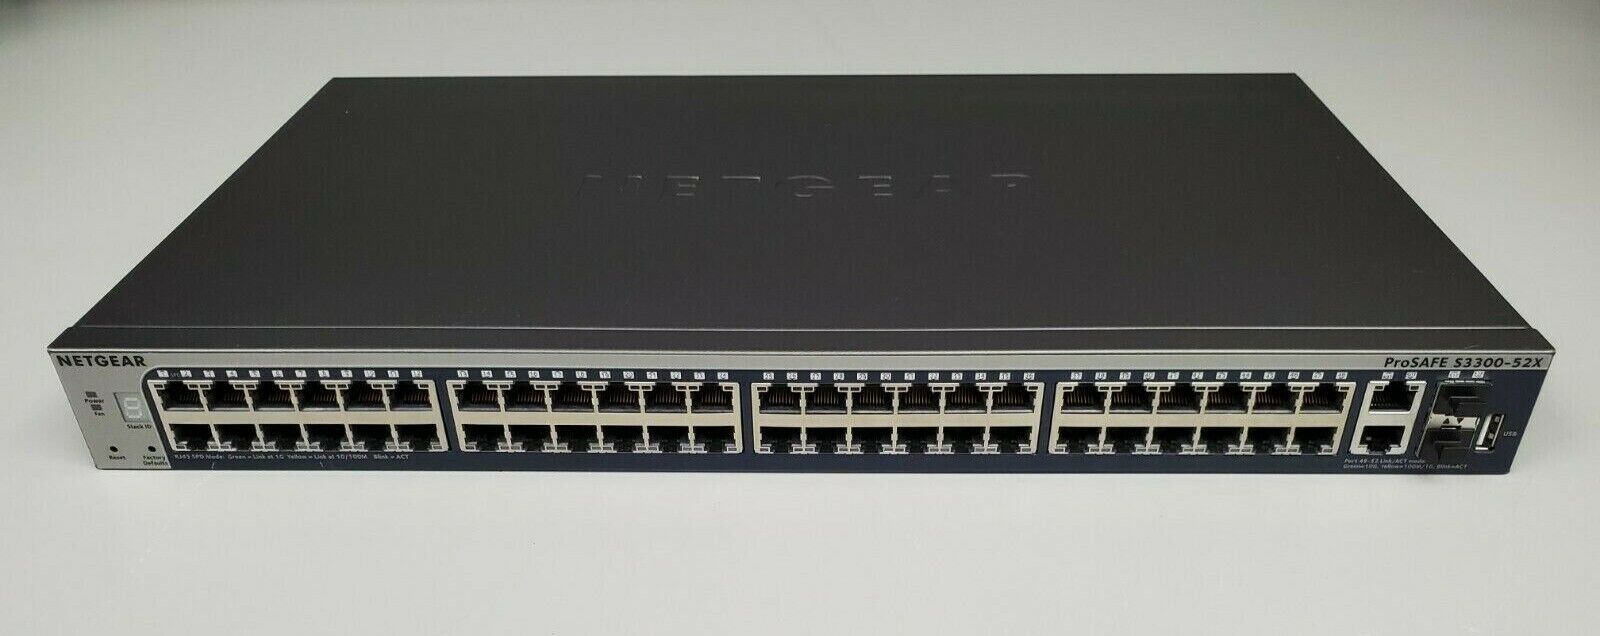 NetGear (GS752TX) S3300-52X - 52-Port Switch w/ 2 Copper 10G and 2 SFP+10G